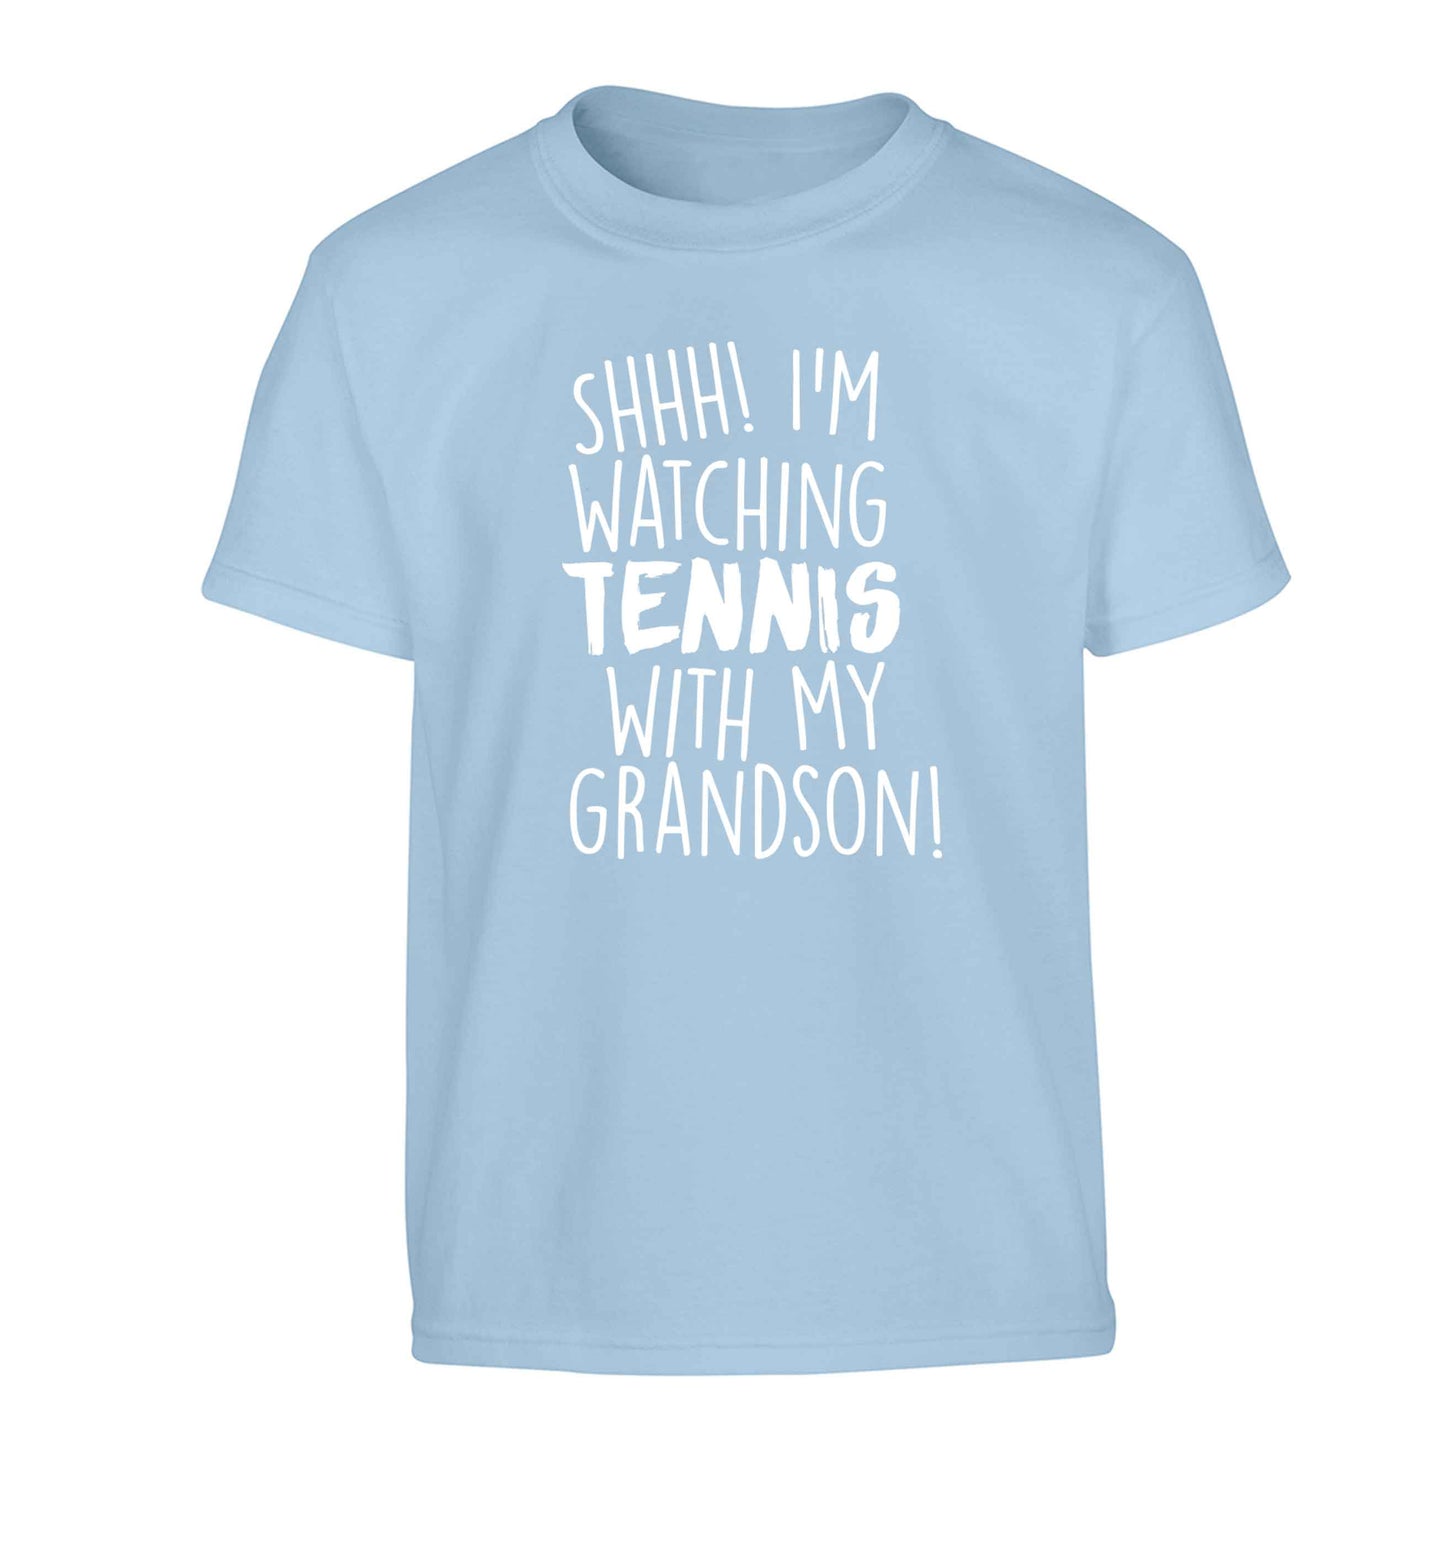 Shh! I'm watching tennis with my grandson! Children's light blue Tshirt 12-13 Years